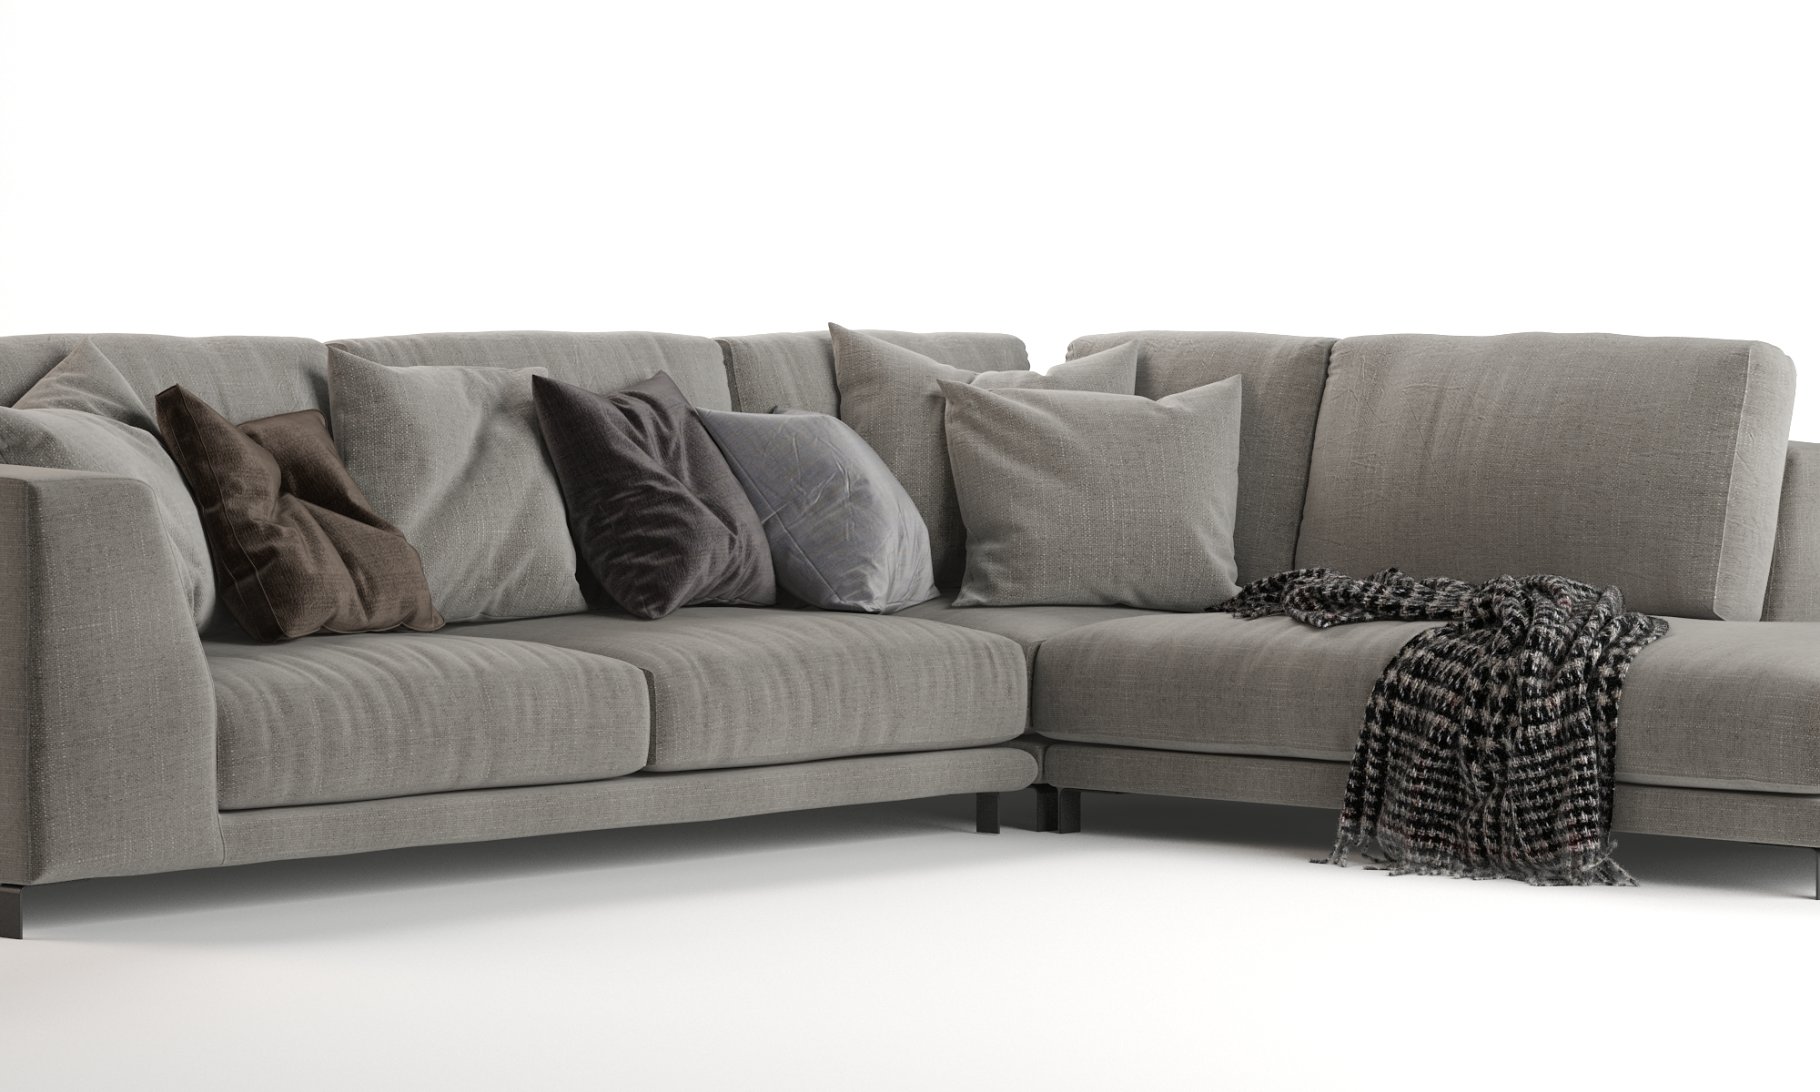 Rendering of an exquisite 3d model of a corner sofa